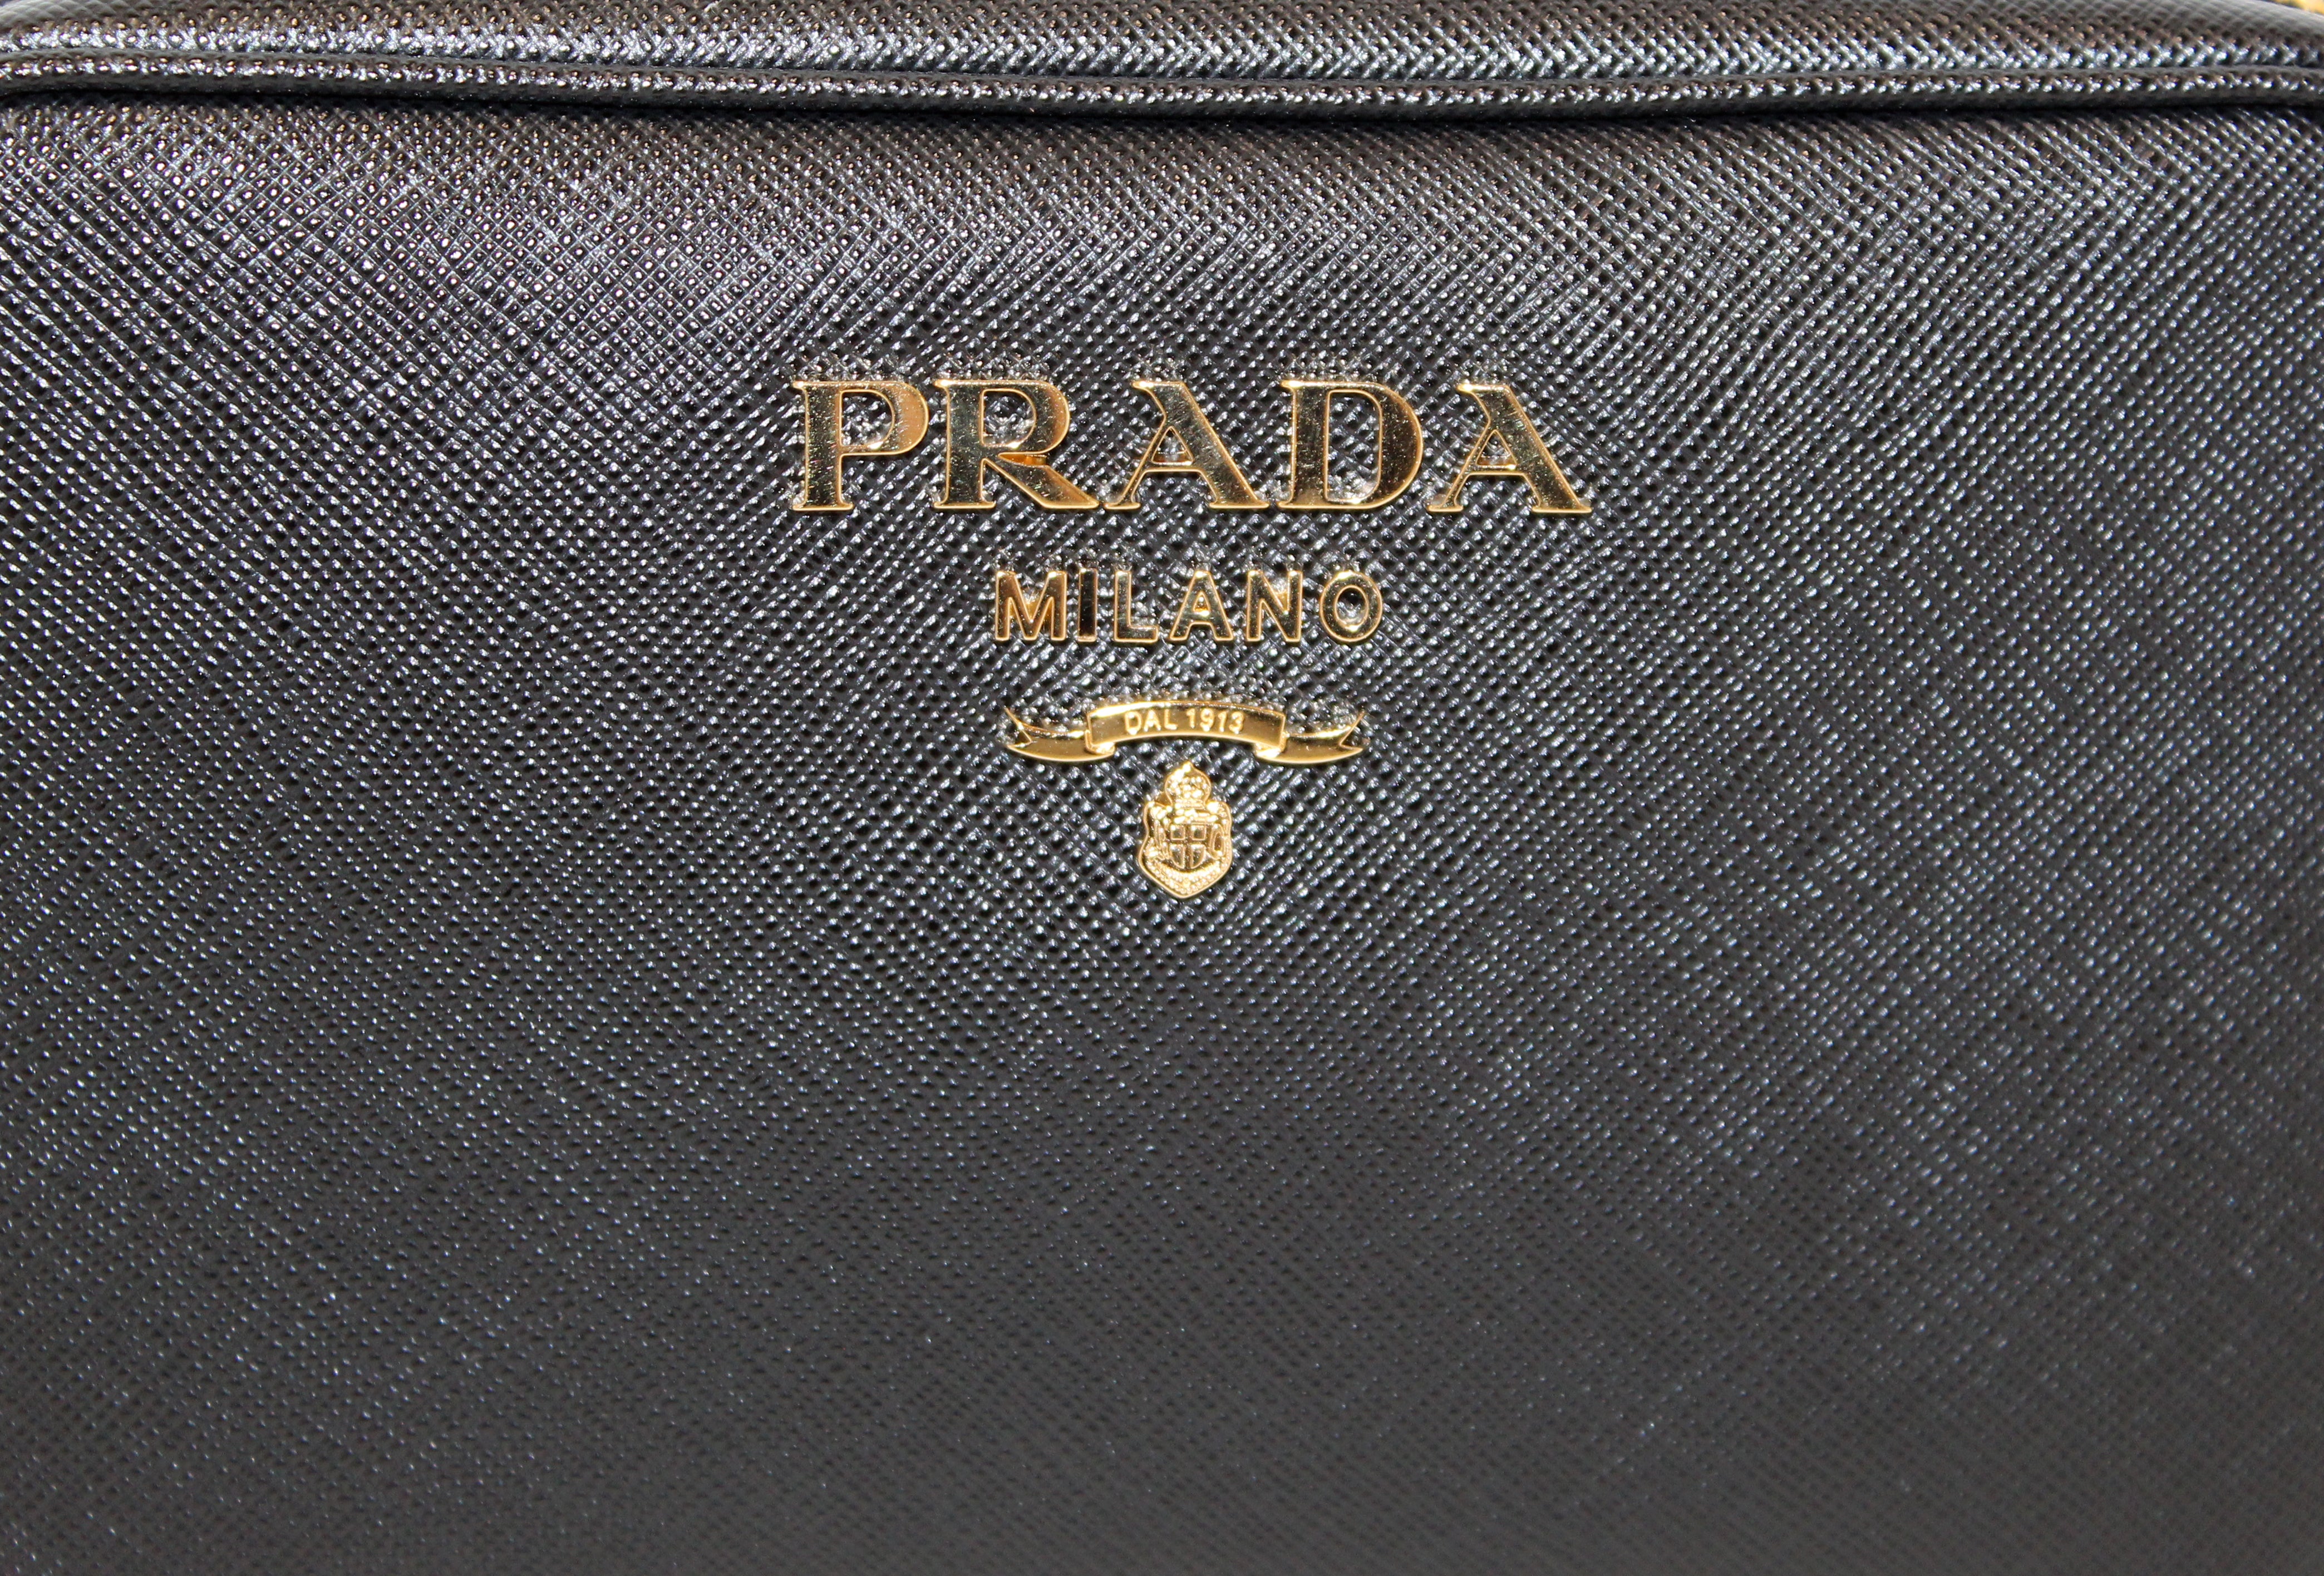 Prada - Bandoliera Tessuto Nylon & Saffiano Leather Black Chain